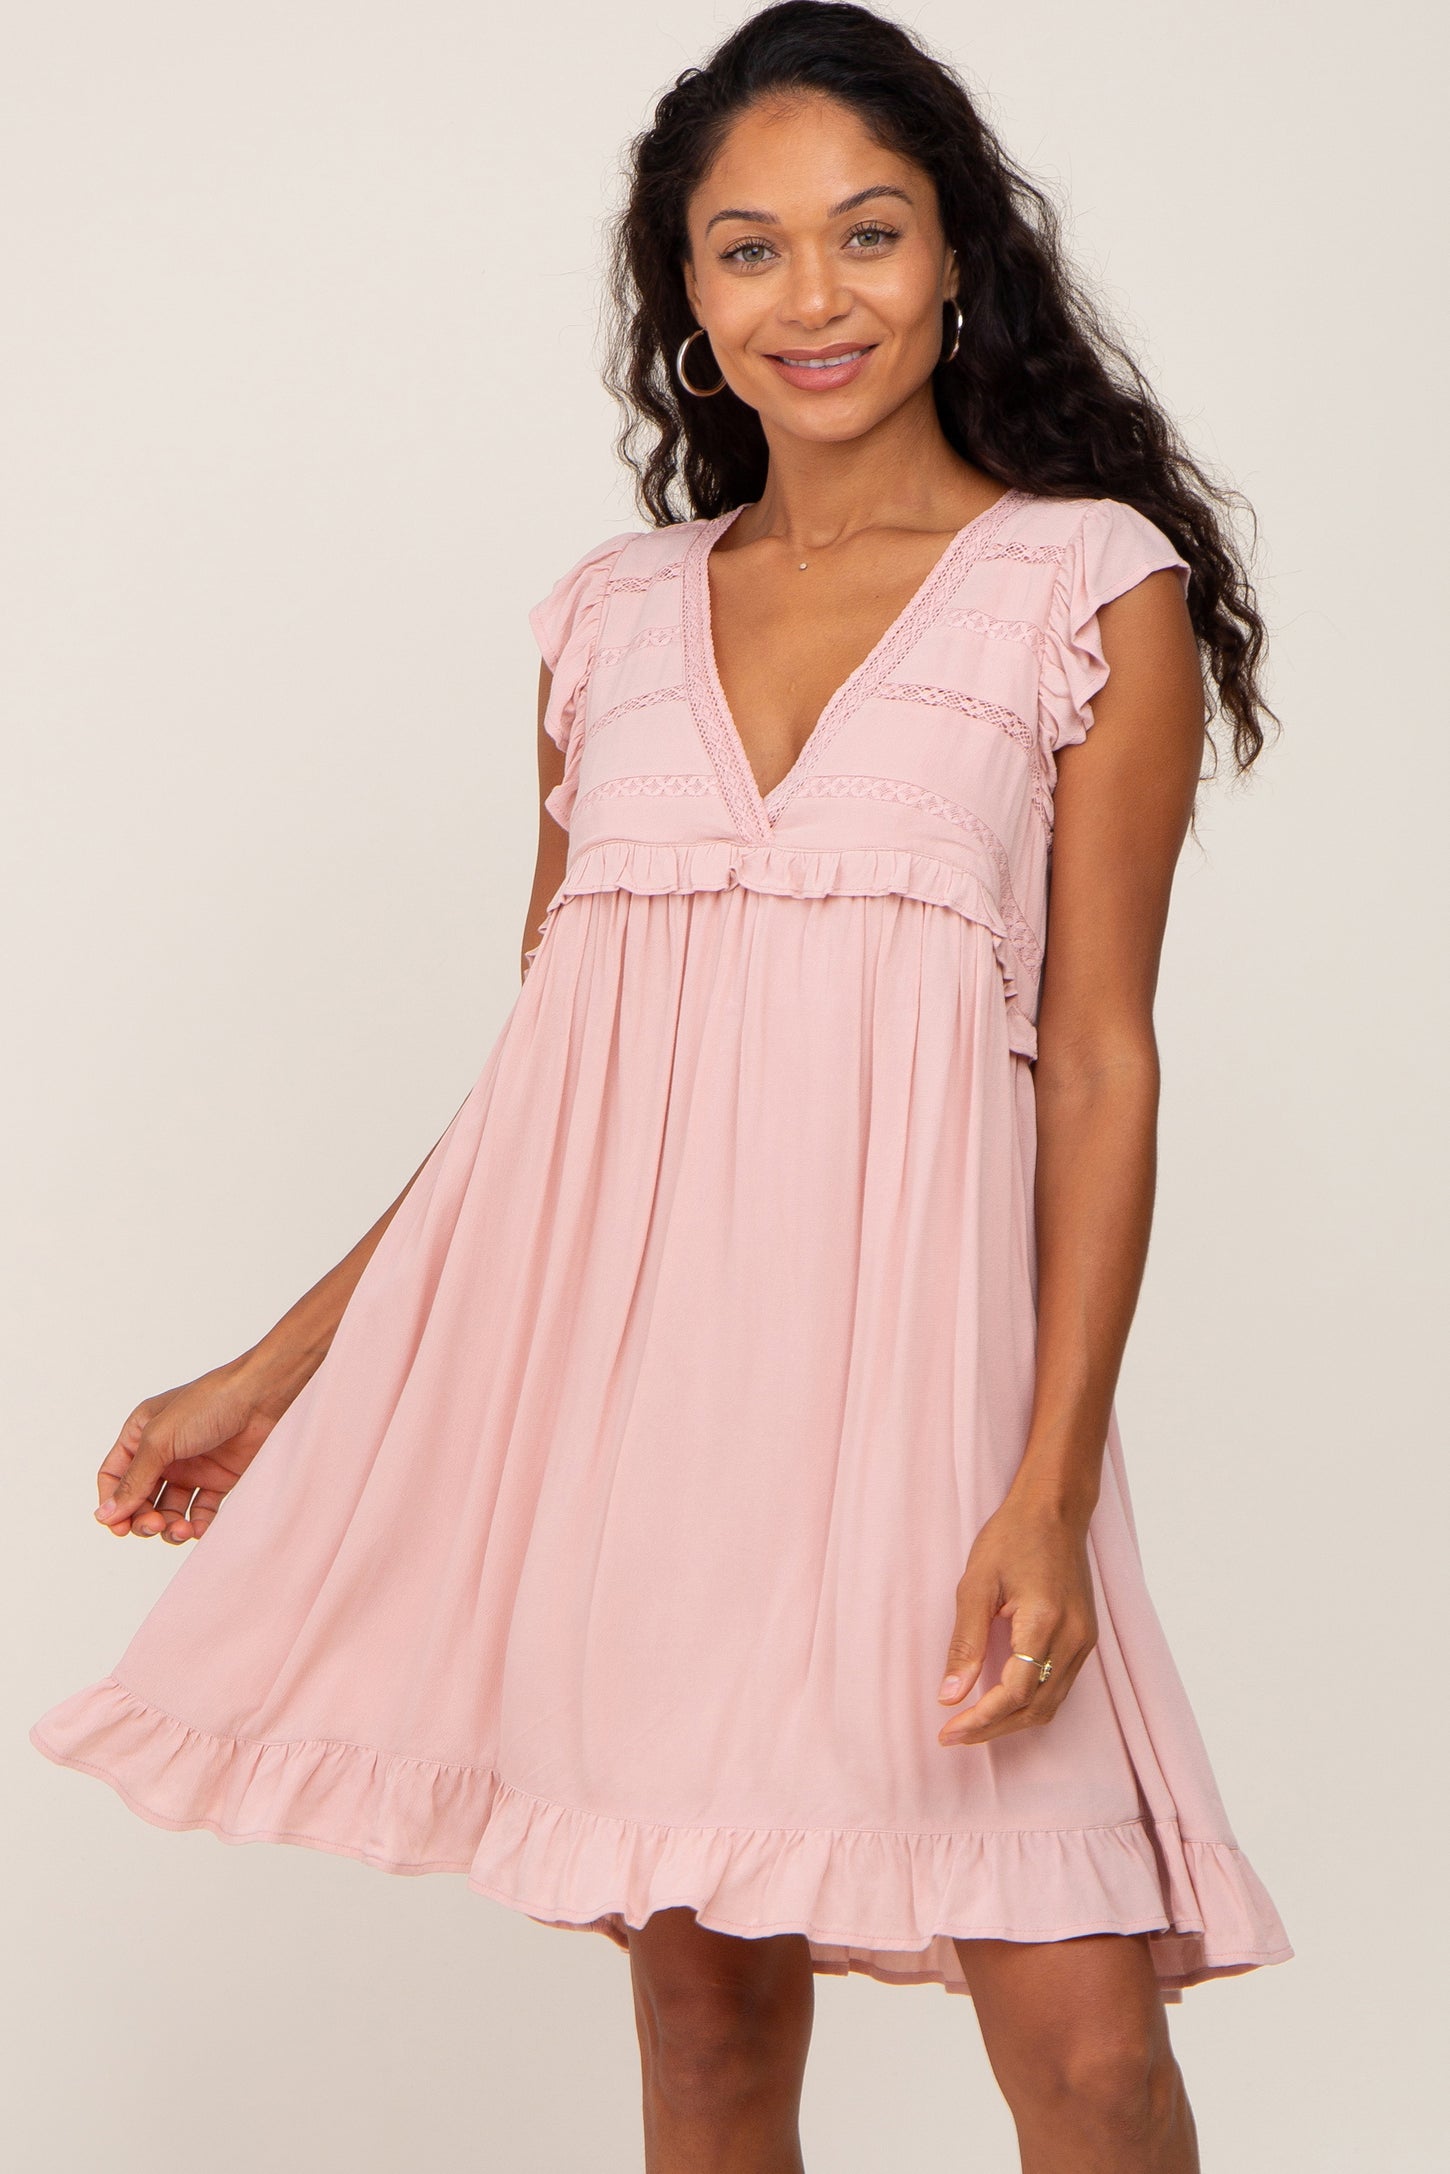 Light Pink Crochet Trim V-Neck Dress